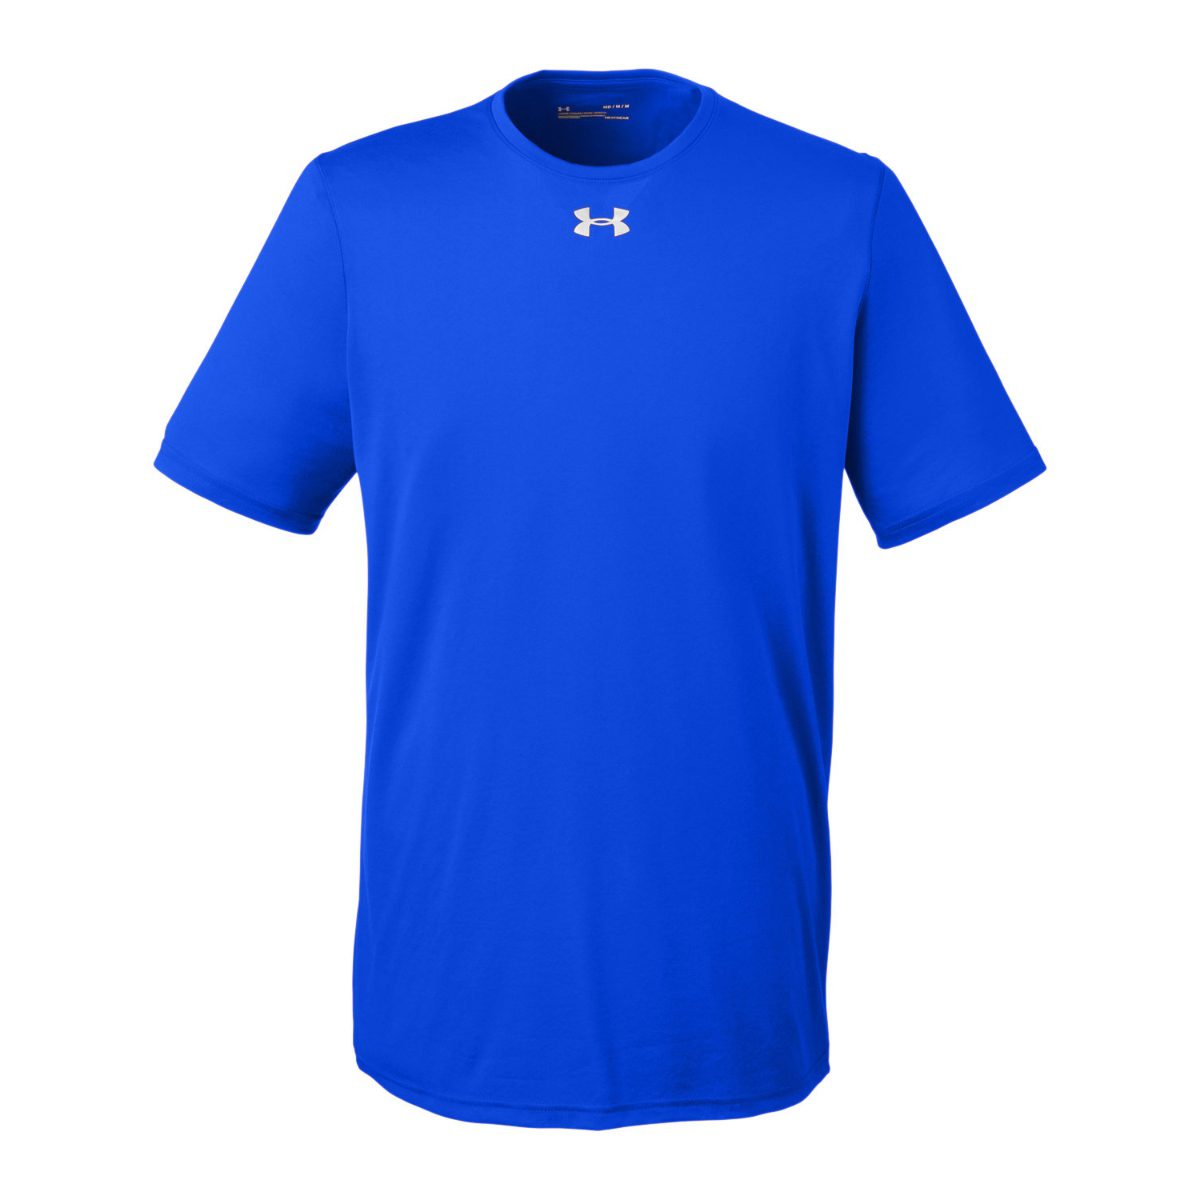 UNDER ARMOUR® Men's Locker T-Shirt 2.0 #1305775 Royal Blue